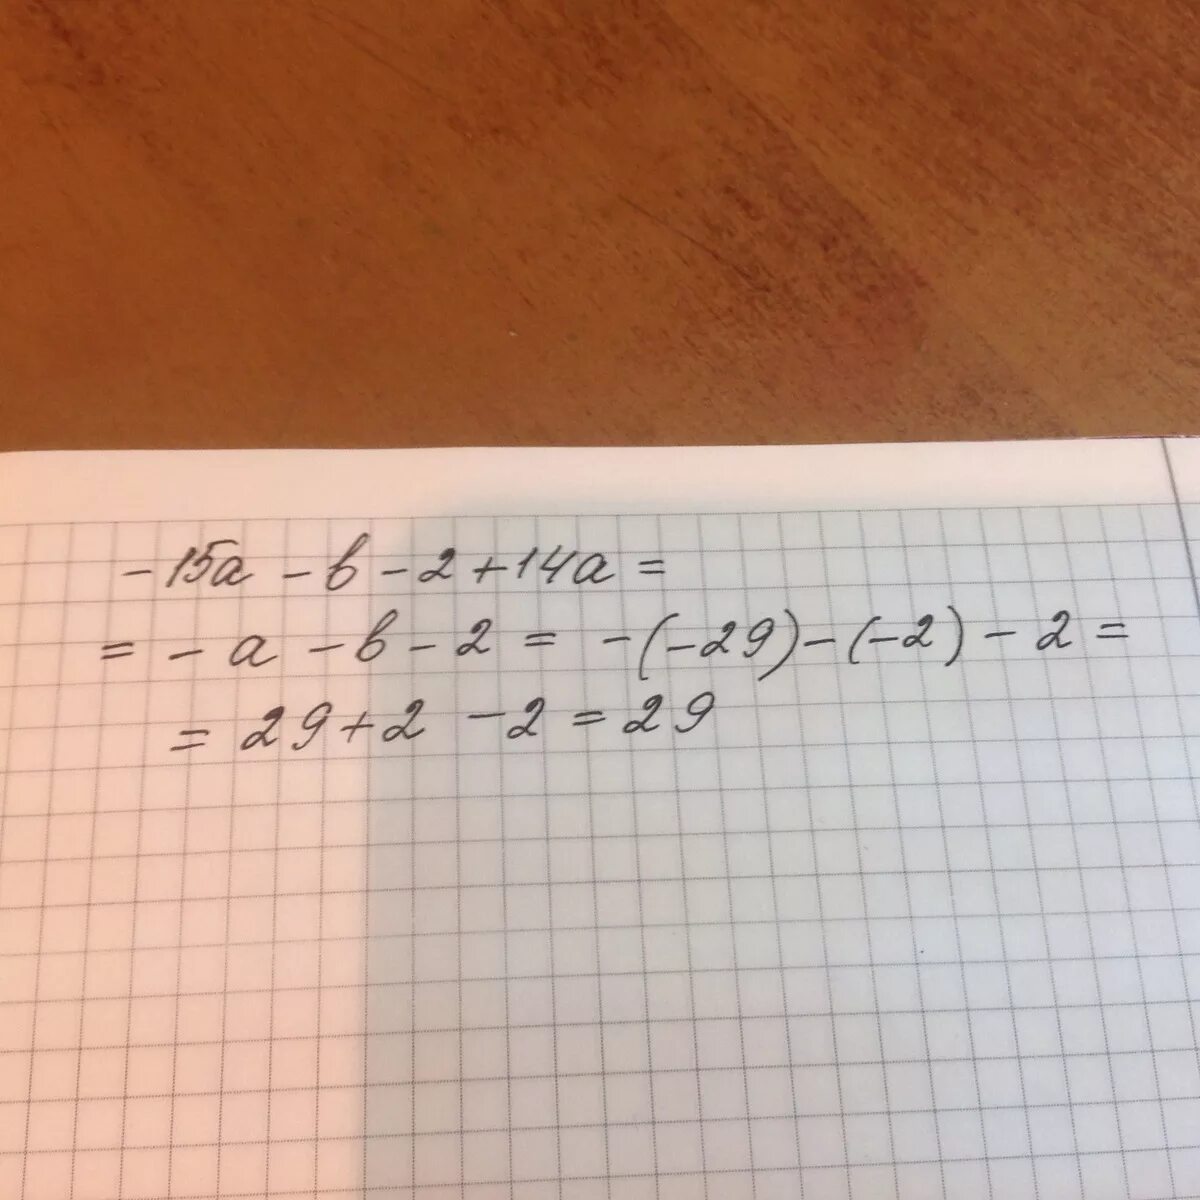 15 6 22 9. 2 3 4 5. 4a a + 2 2 выражение а2 - 4 2а. Разложите на множители x(x-y)+a(x-y). X 5 1 разложить на множители.